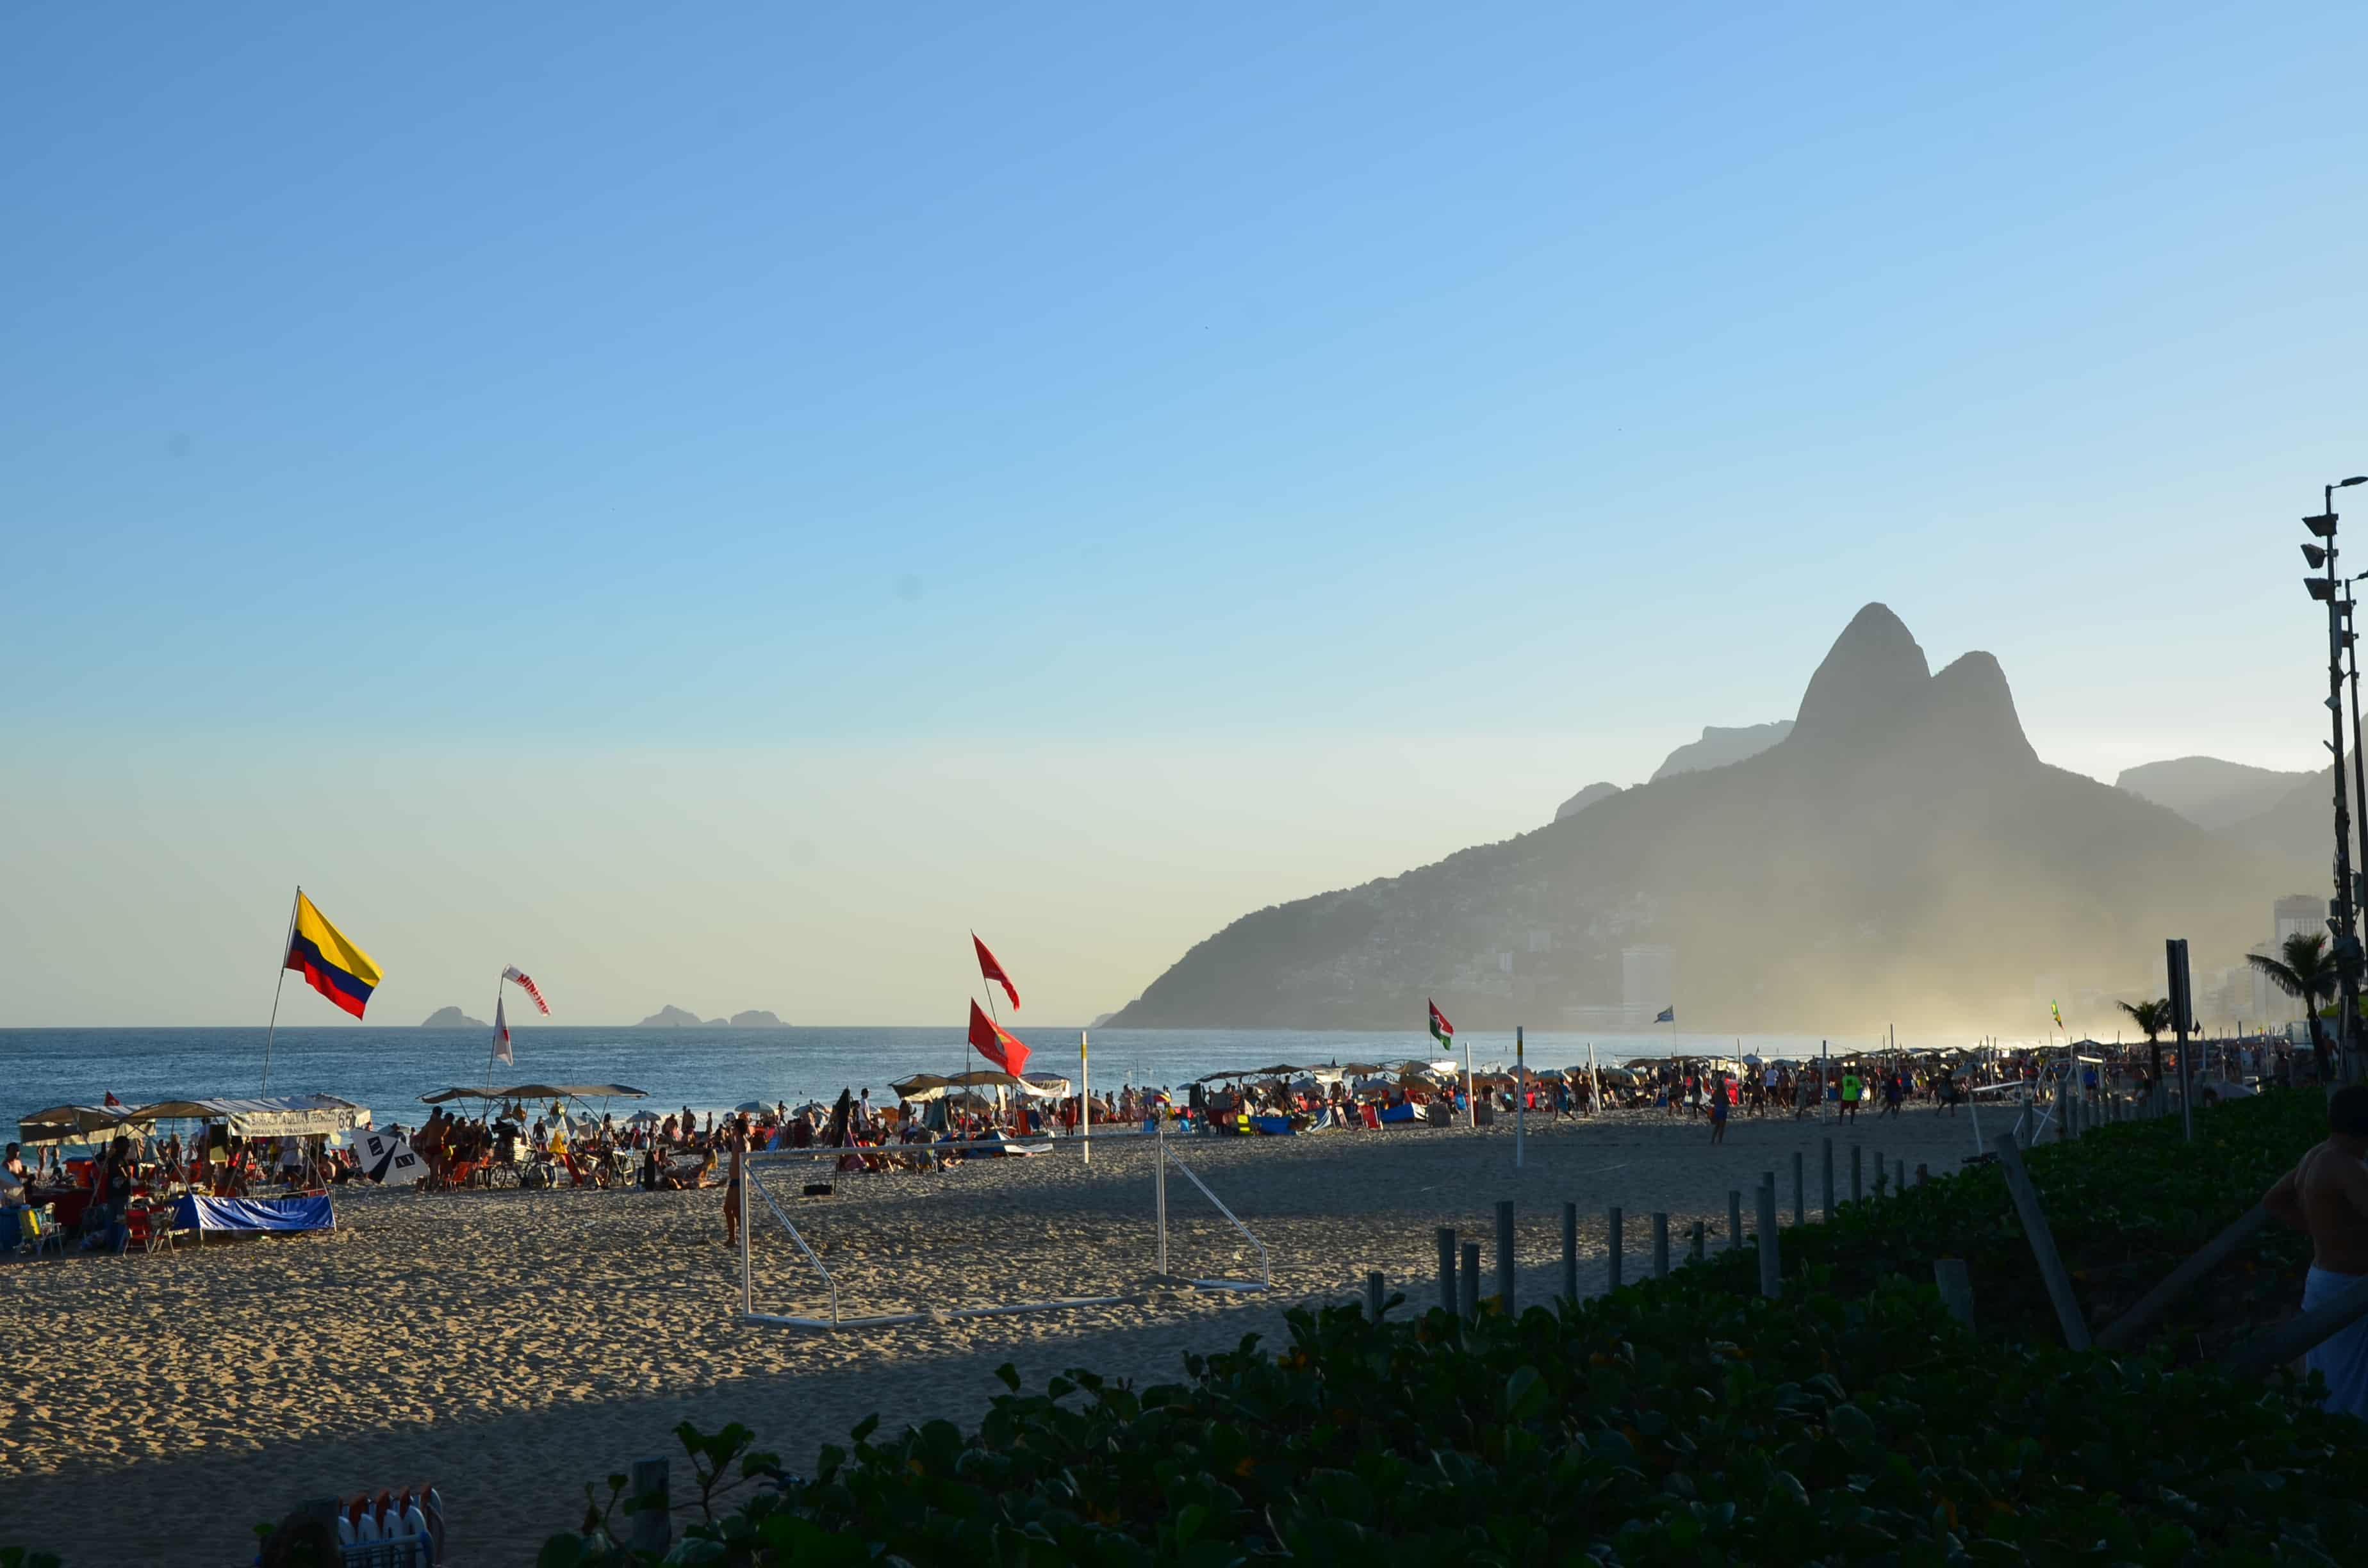 Ipanema in Rio de Janeiro, Brazil